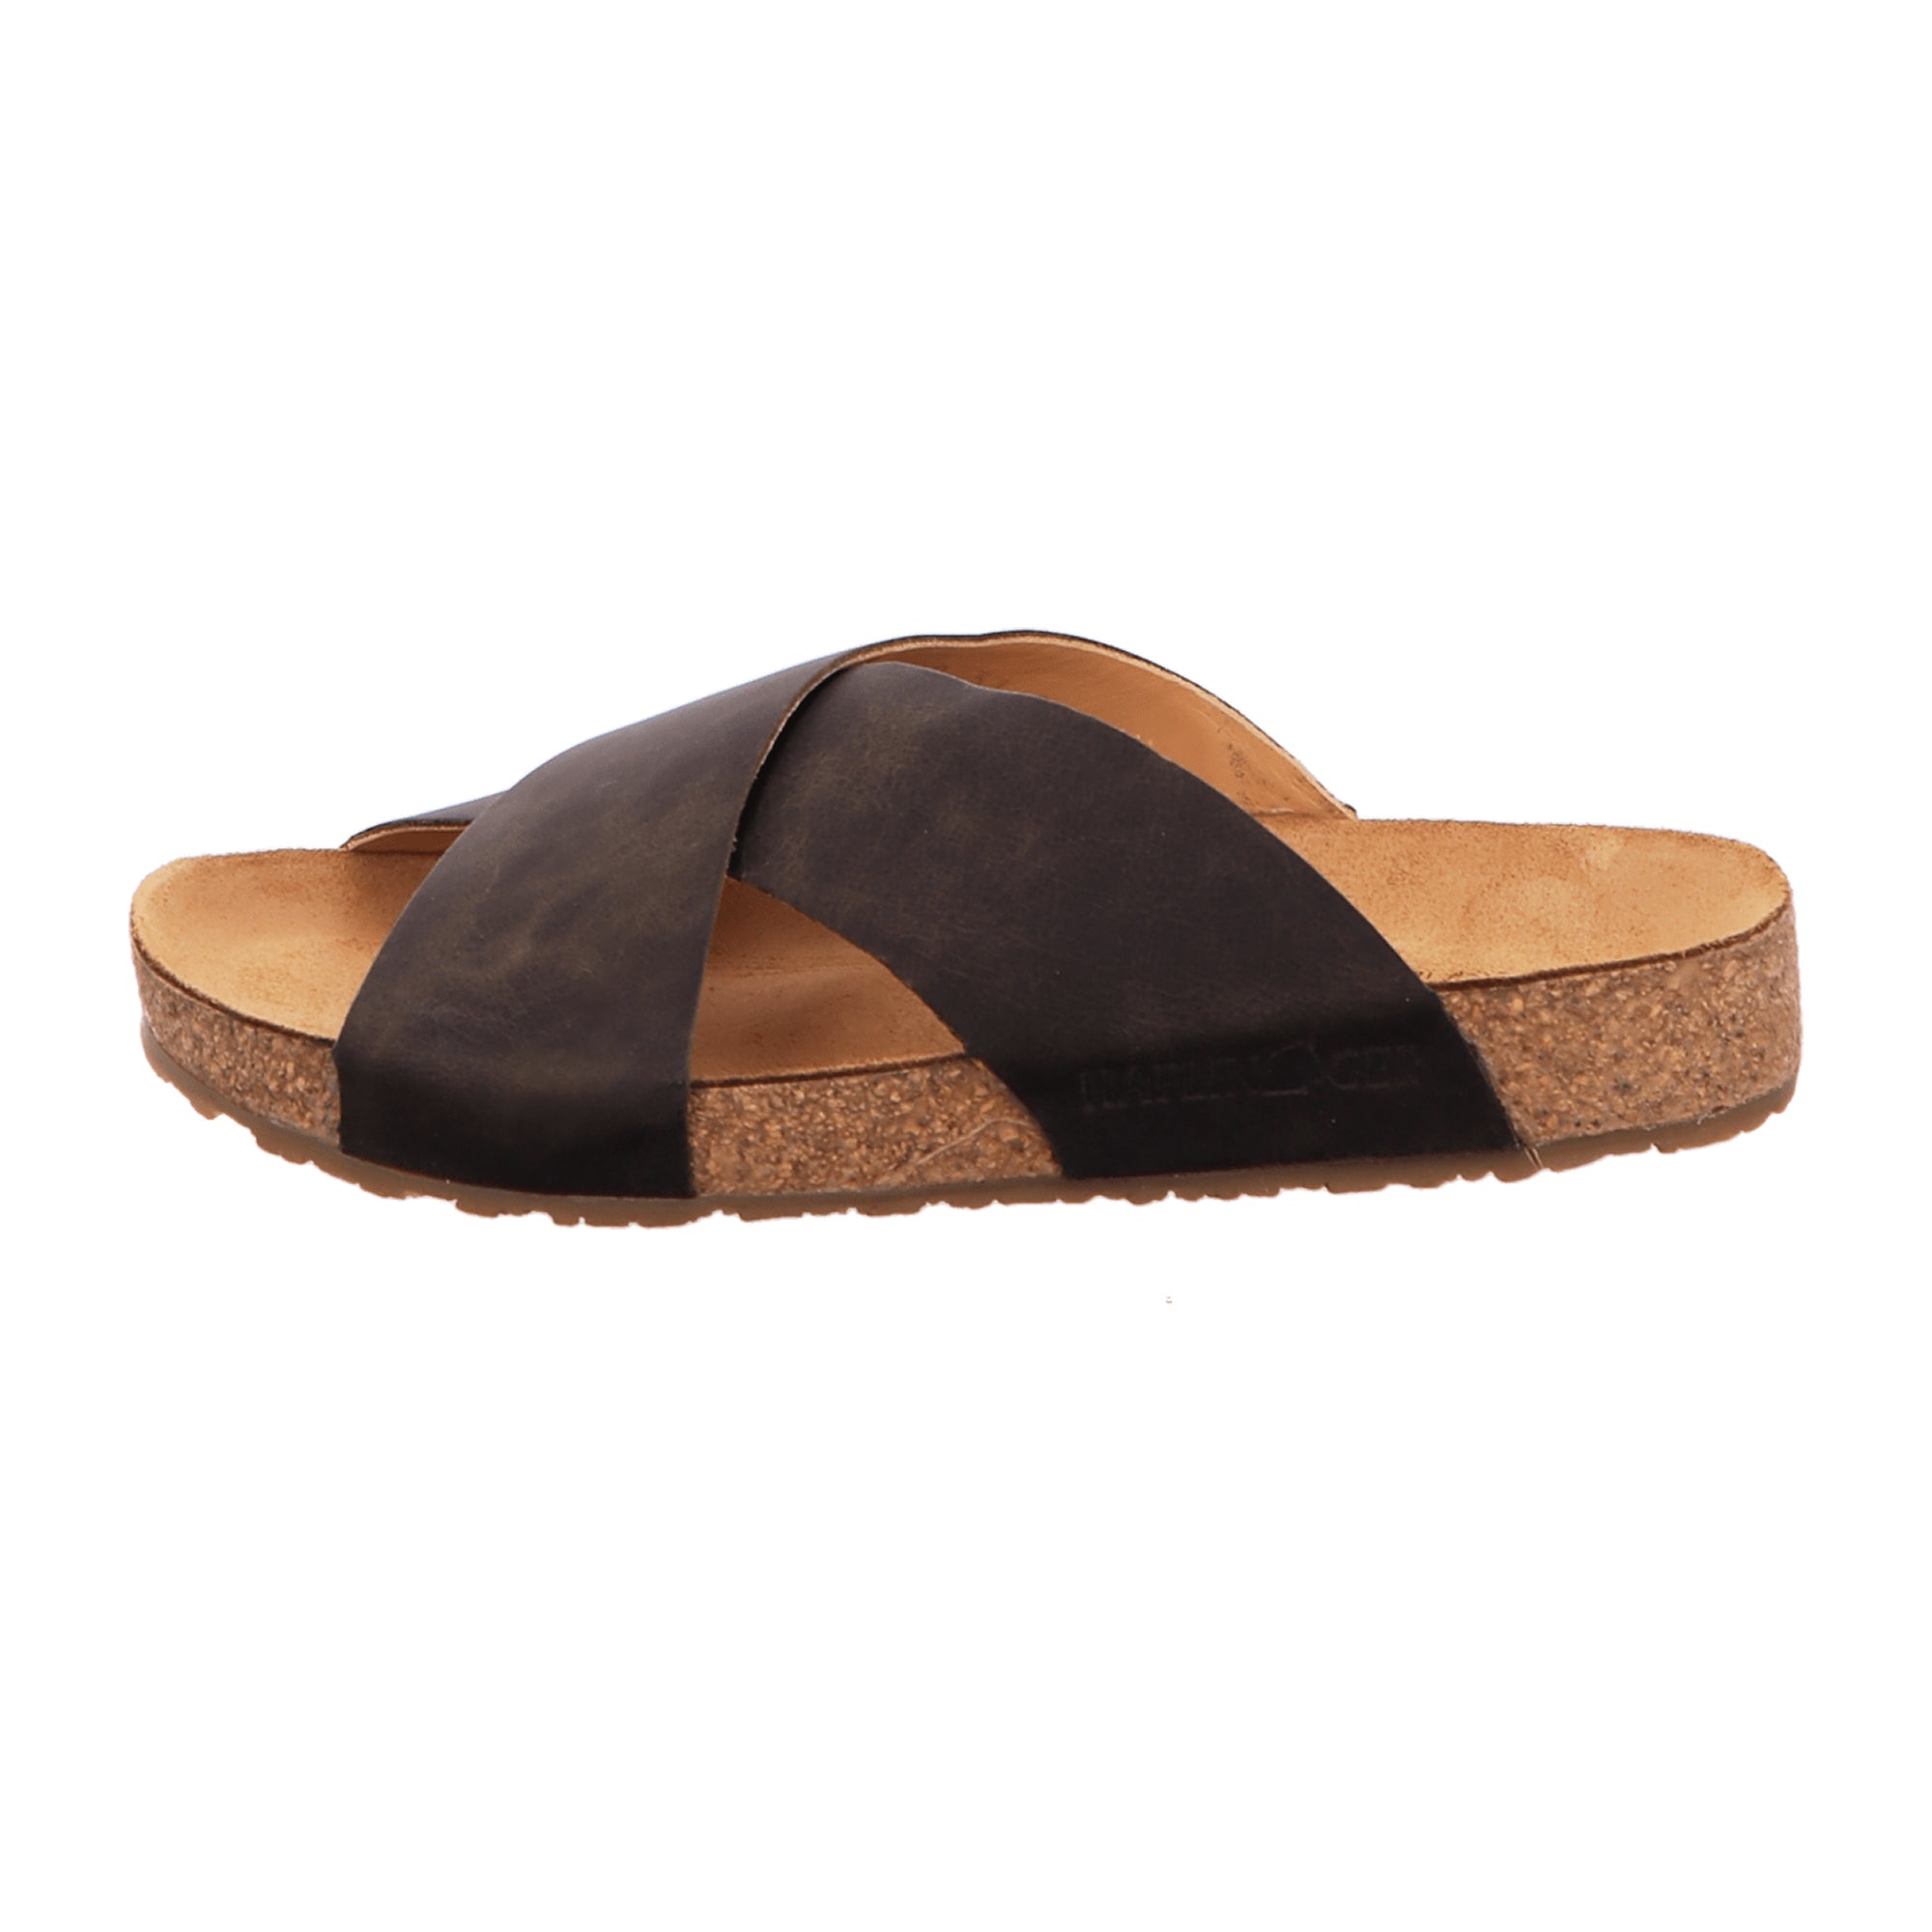 Haflinger 819412 Women's Brown Comfort Slippers - Stylish & Durable